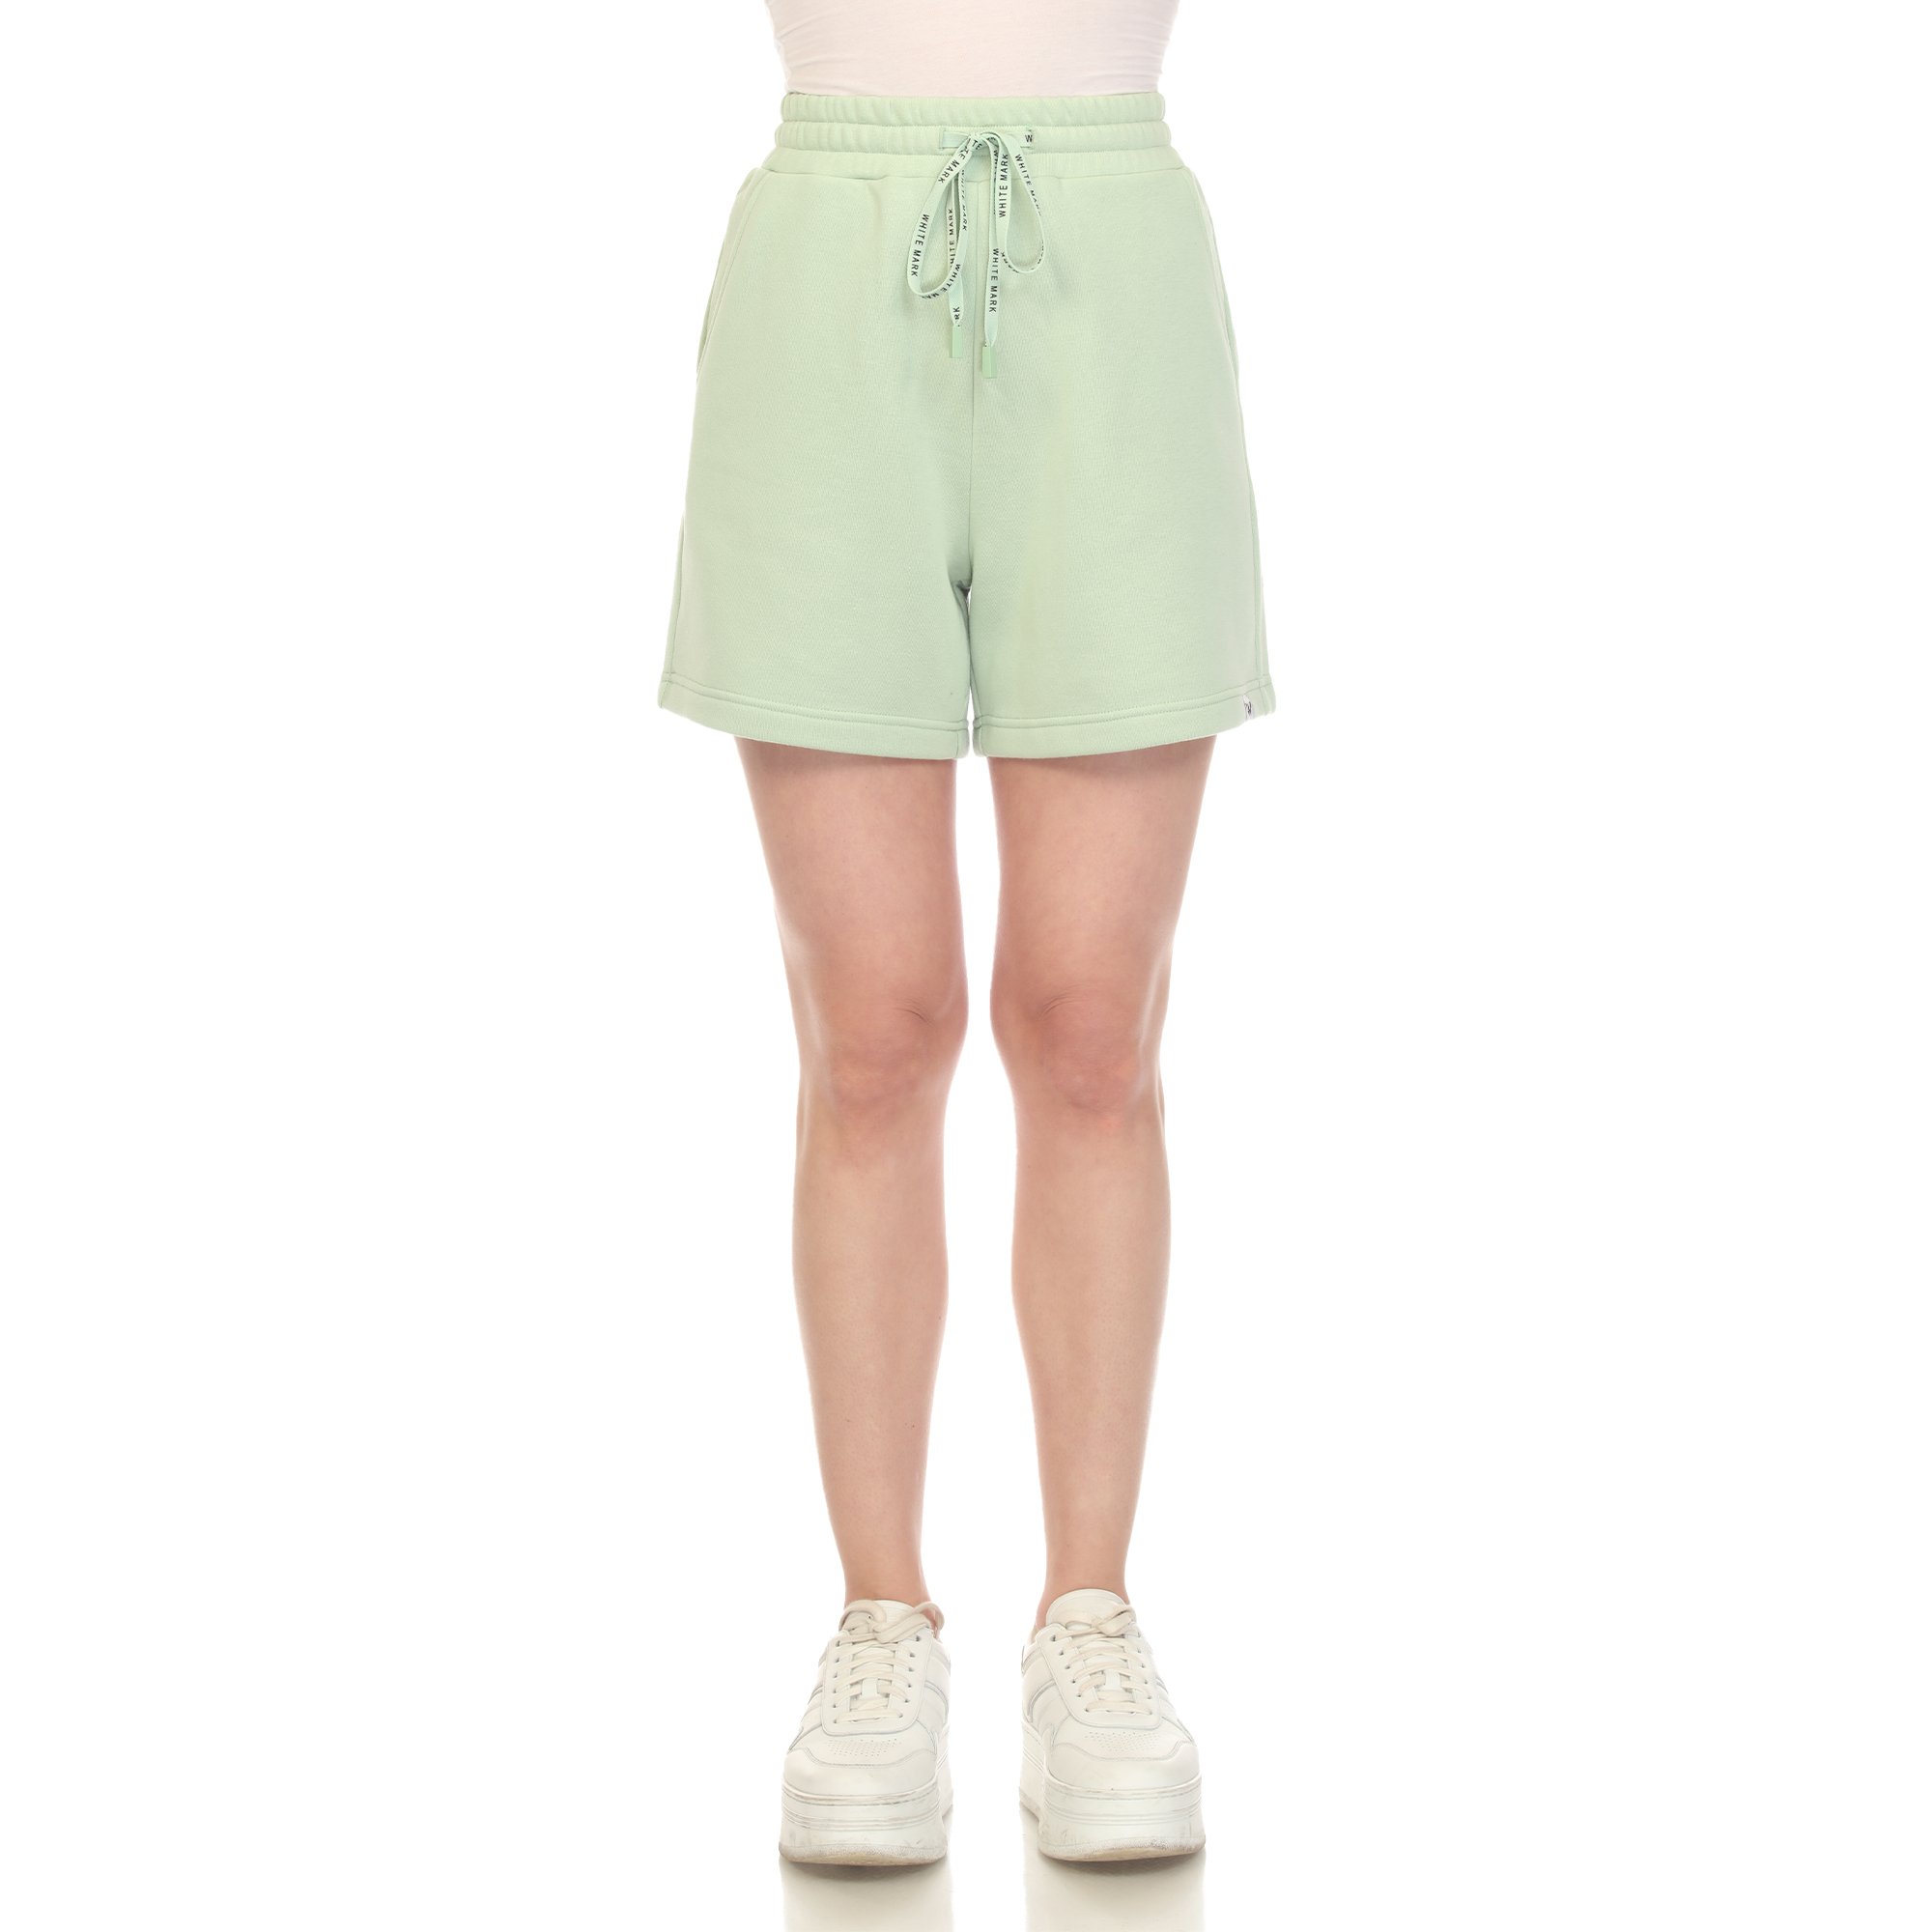 White Mark Women's Super Soft Drawstring Waistband Sweat Shorts - Sage, Medium